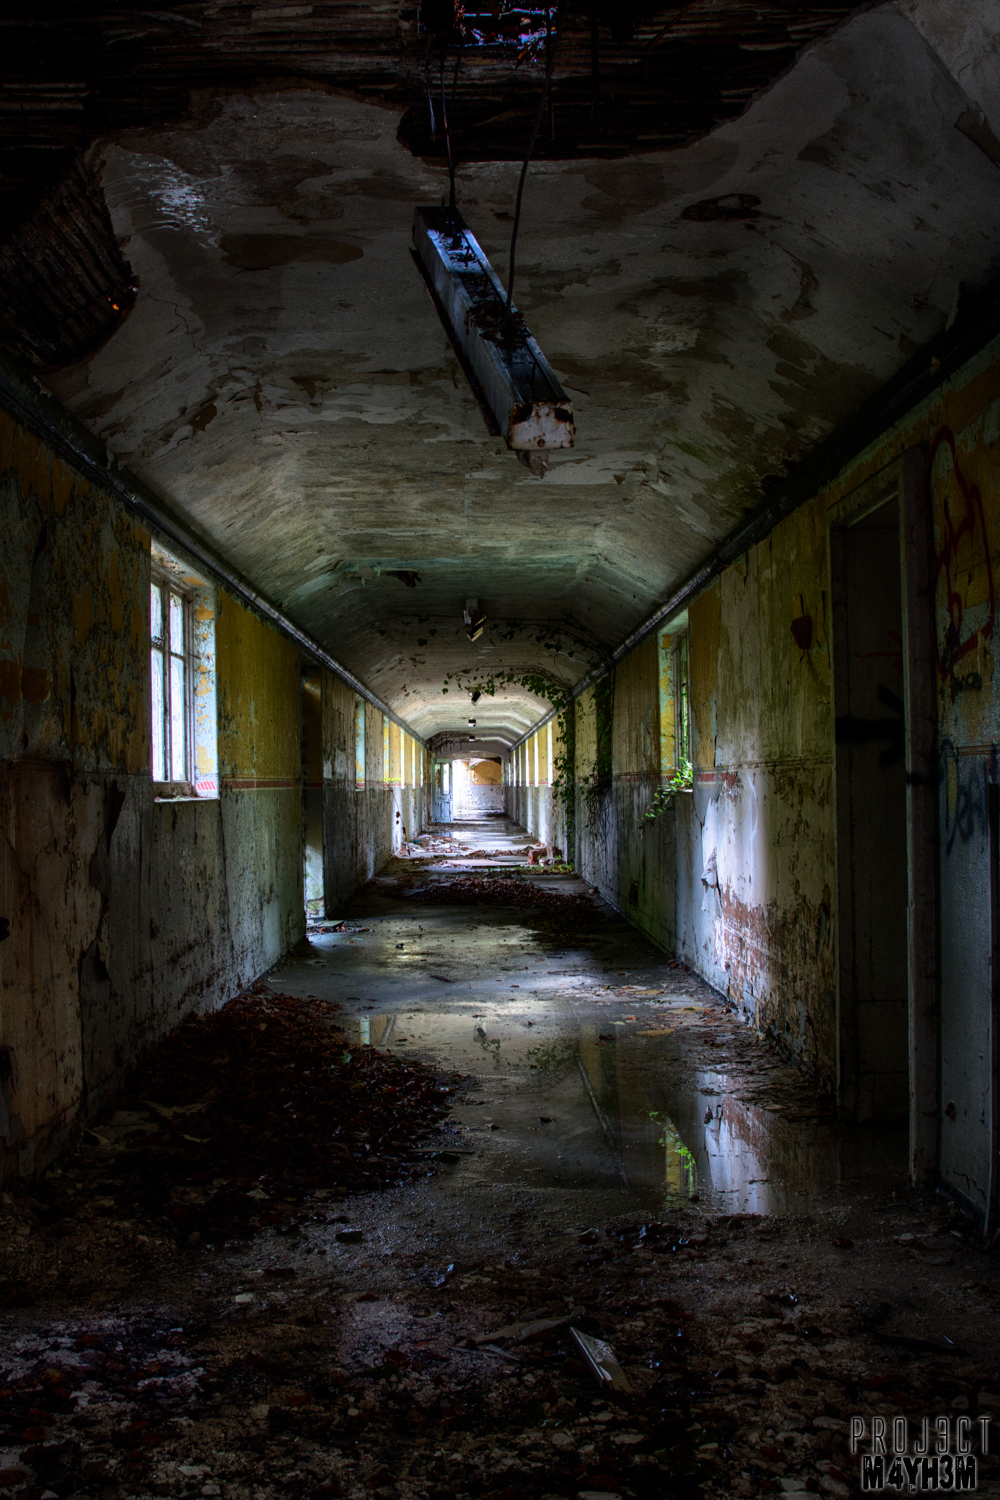 Severalls Lunatic Asylum - Reflections in the Corridor